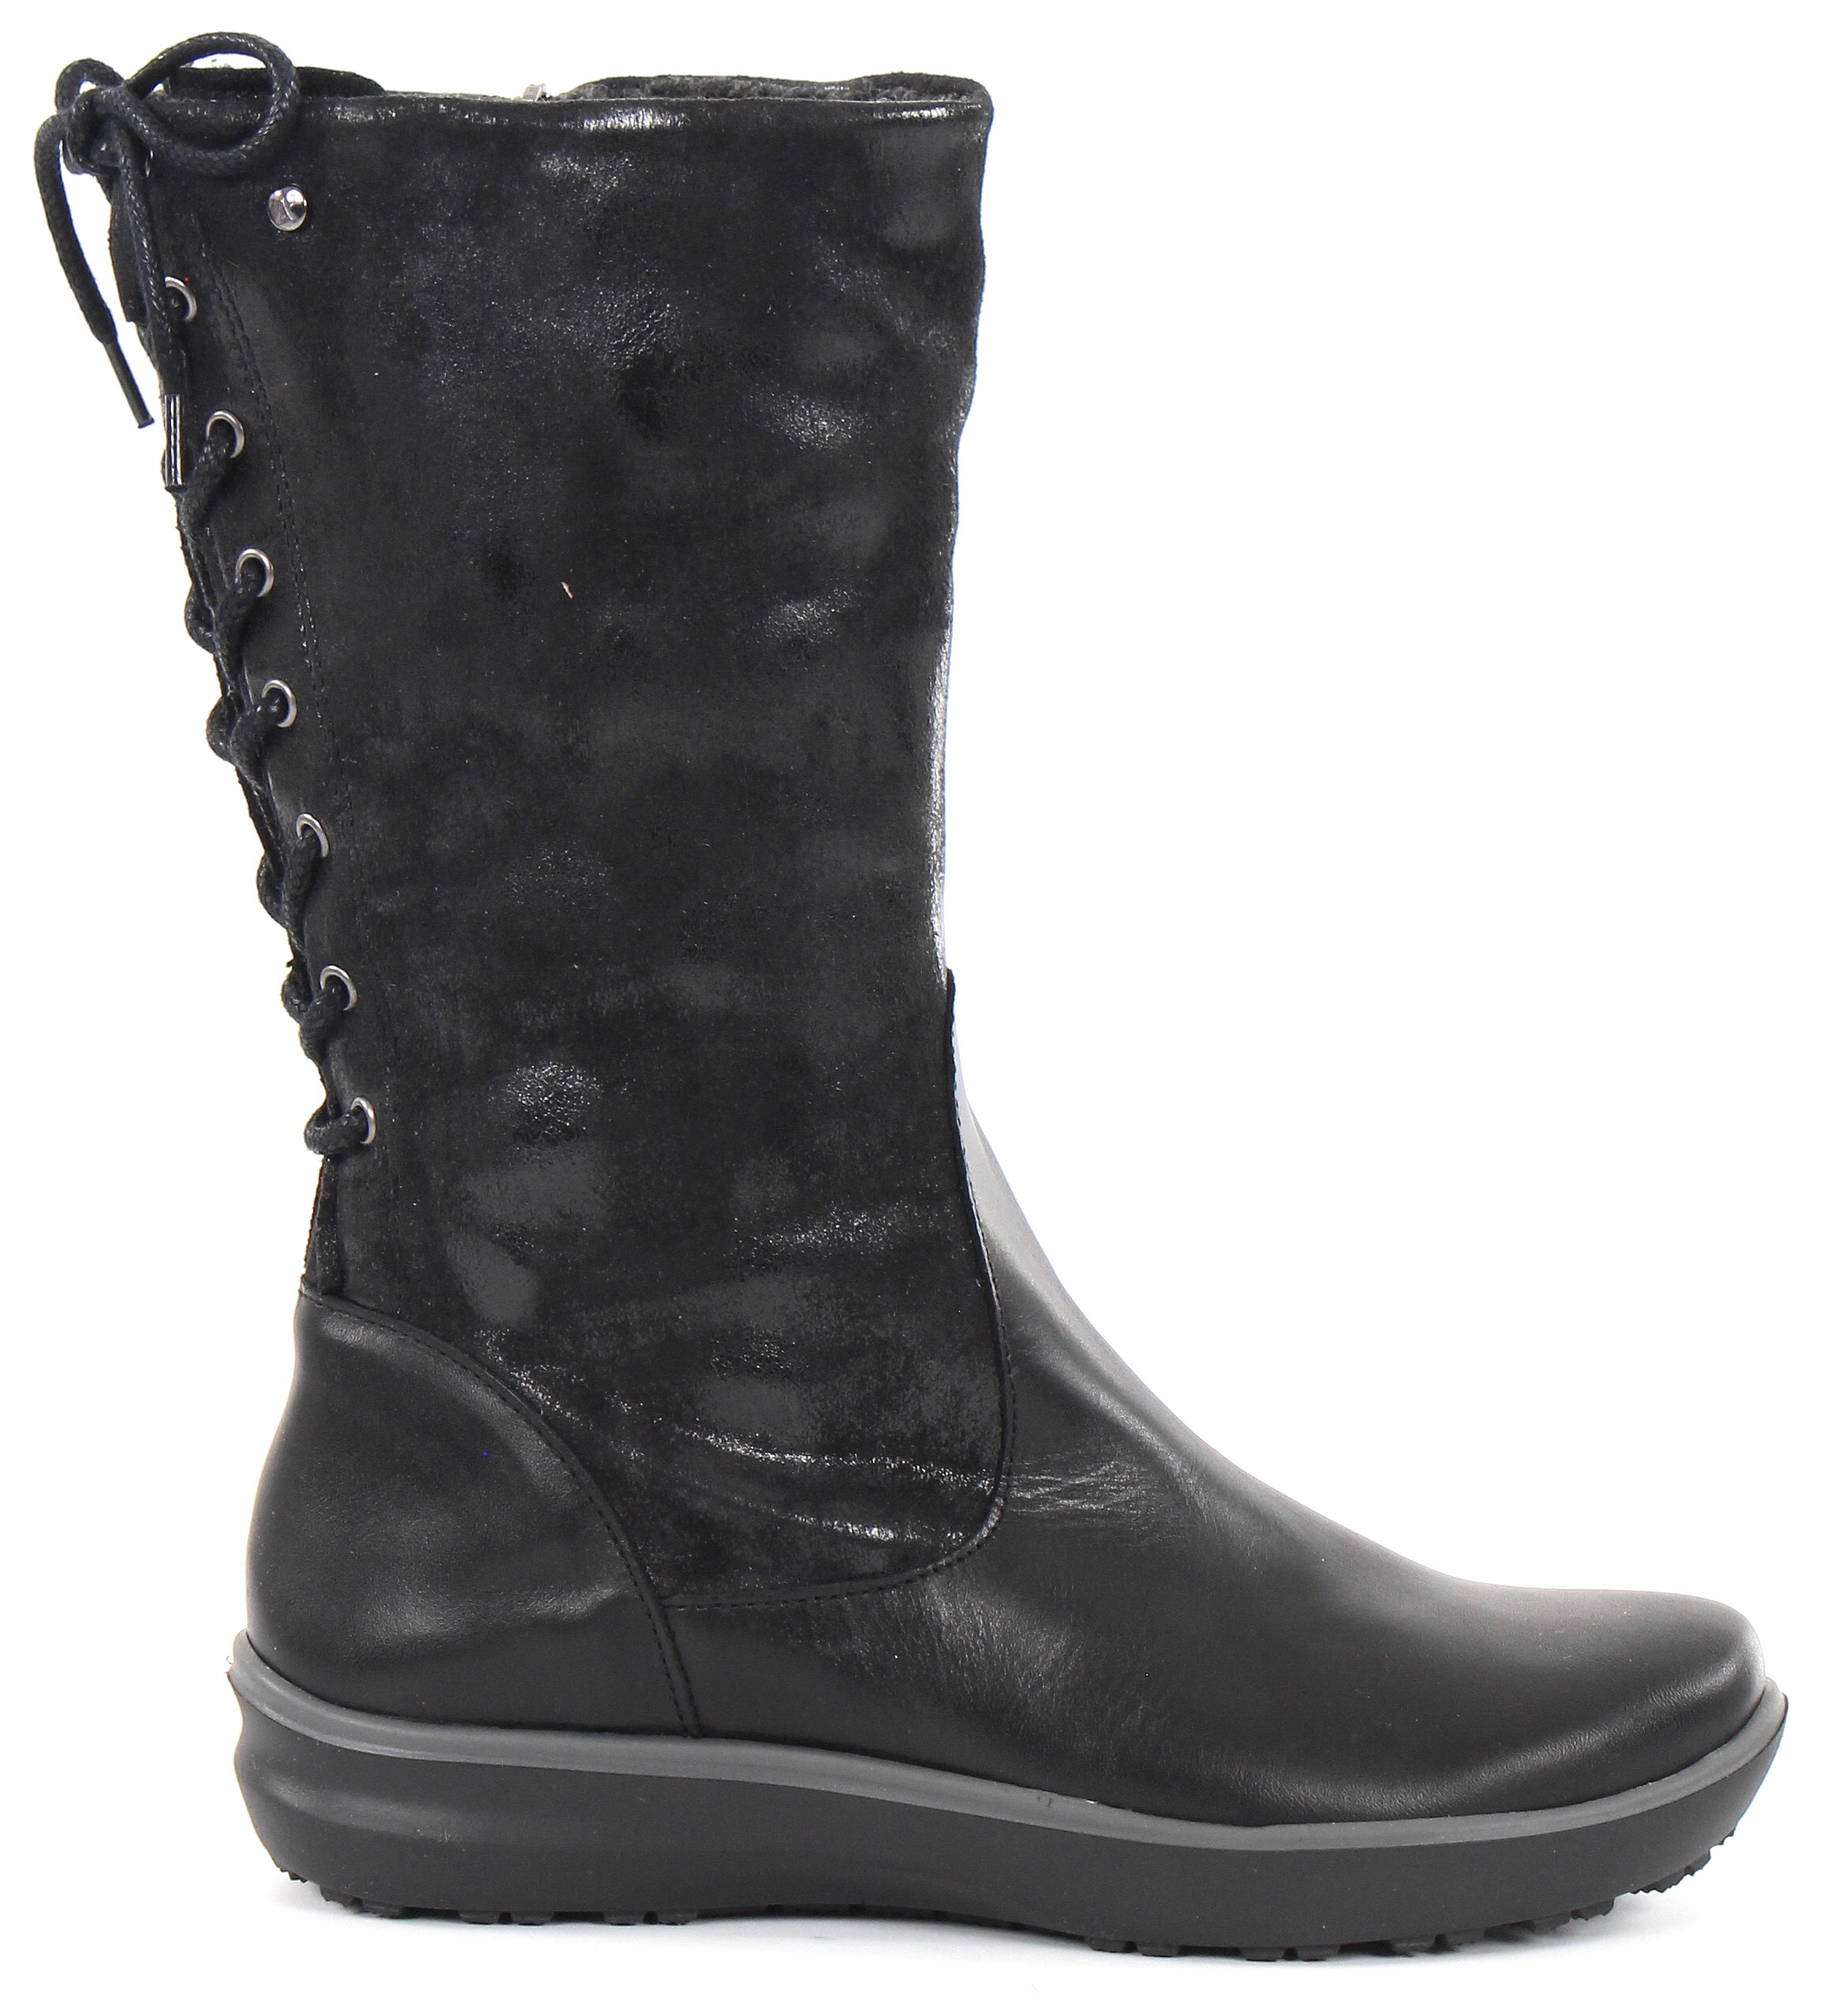 Arcopedico Boots Frozen E54 6155, Black - Stilettoshop.eu webstore